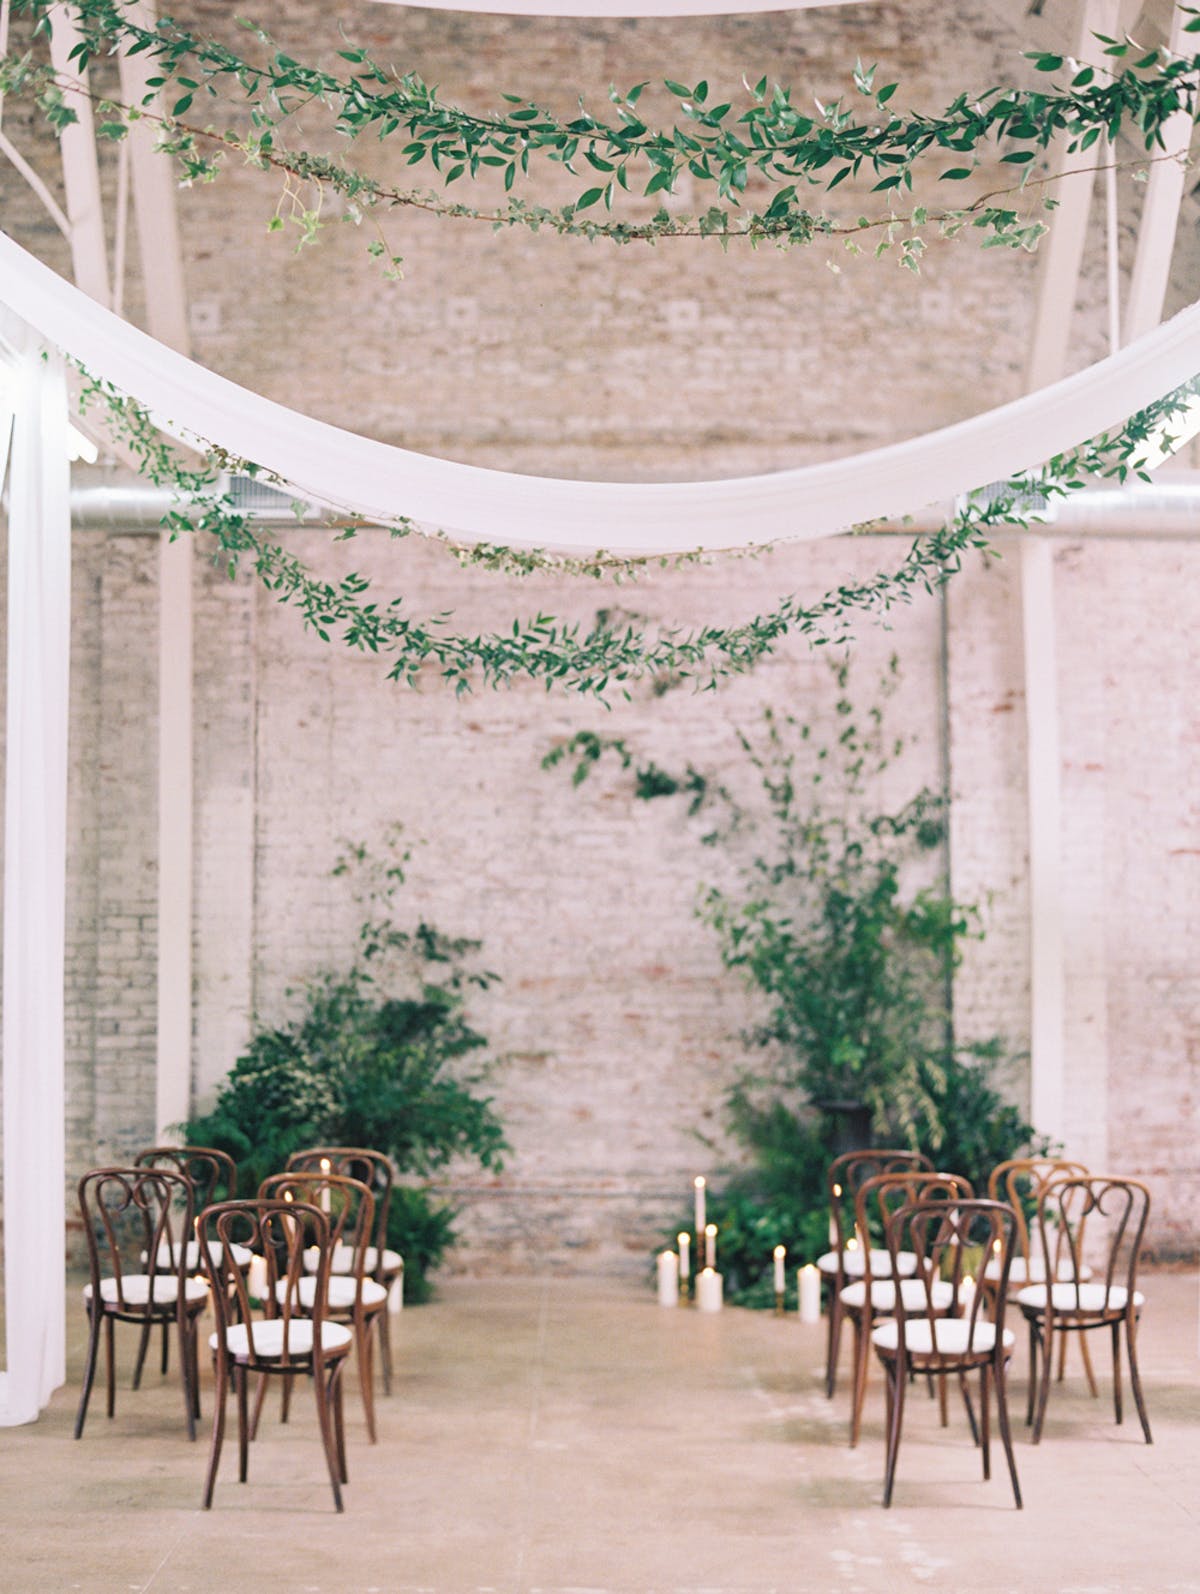 Stunning minimalist indoor wedding ceremony decor with greeneries and white draping. // ❤️ Check Out These Gorgeous 20 Indoor Wedding Ceremony Ideas. // https://mysweetengagement.com/indoor-wedding-ceremony-ideas